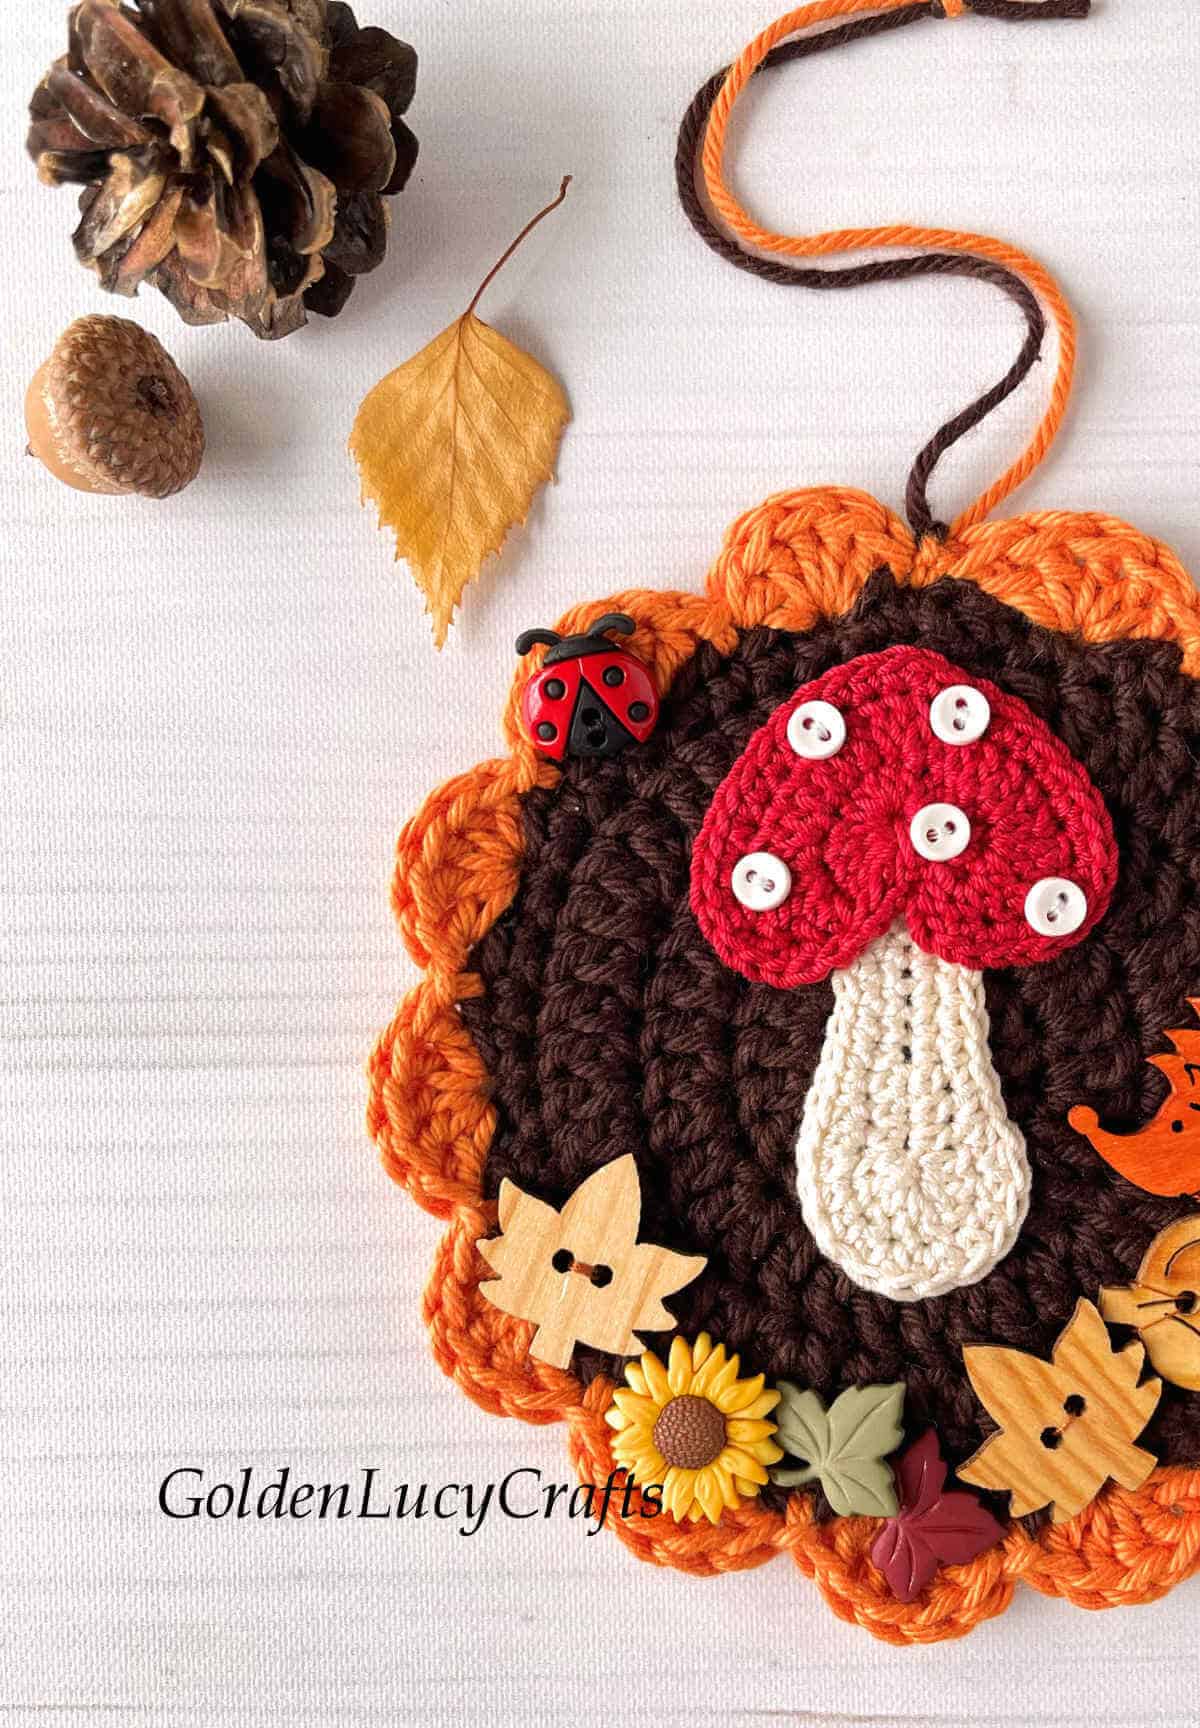 Crochet Fall mushroom ornament close up picture.